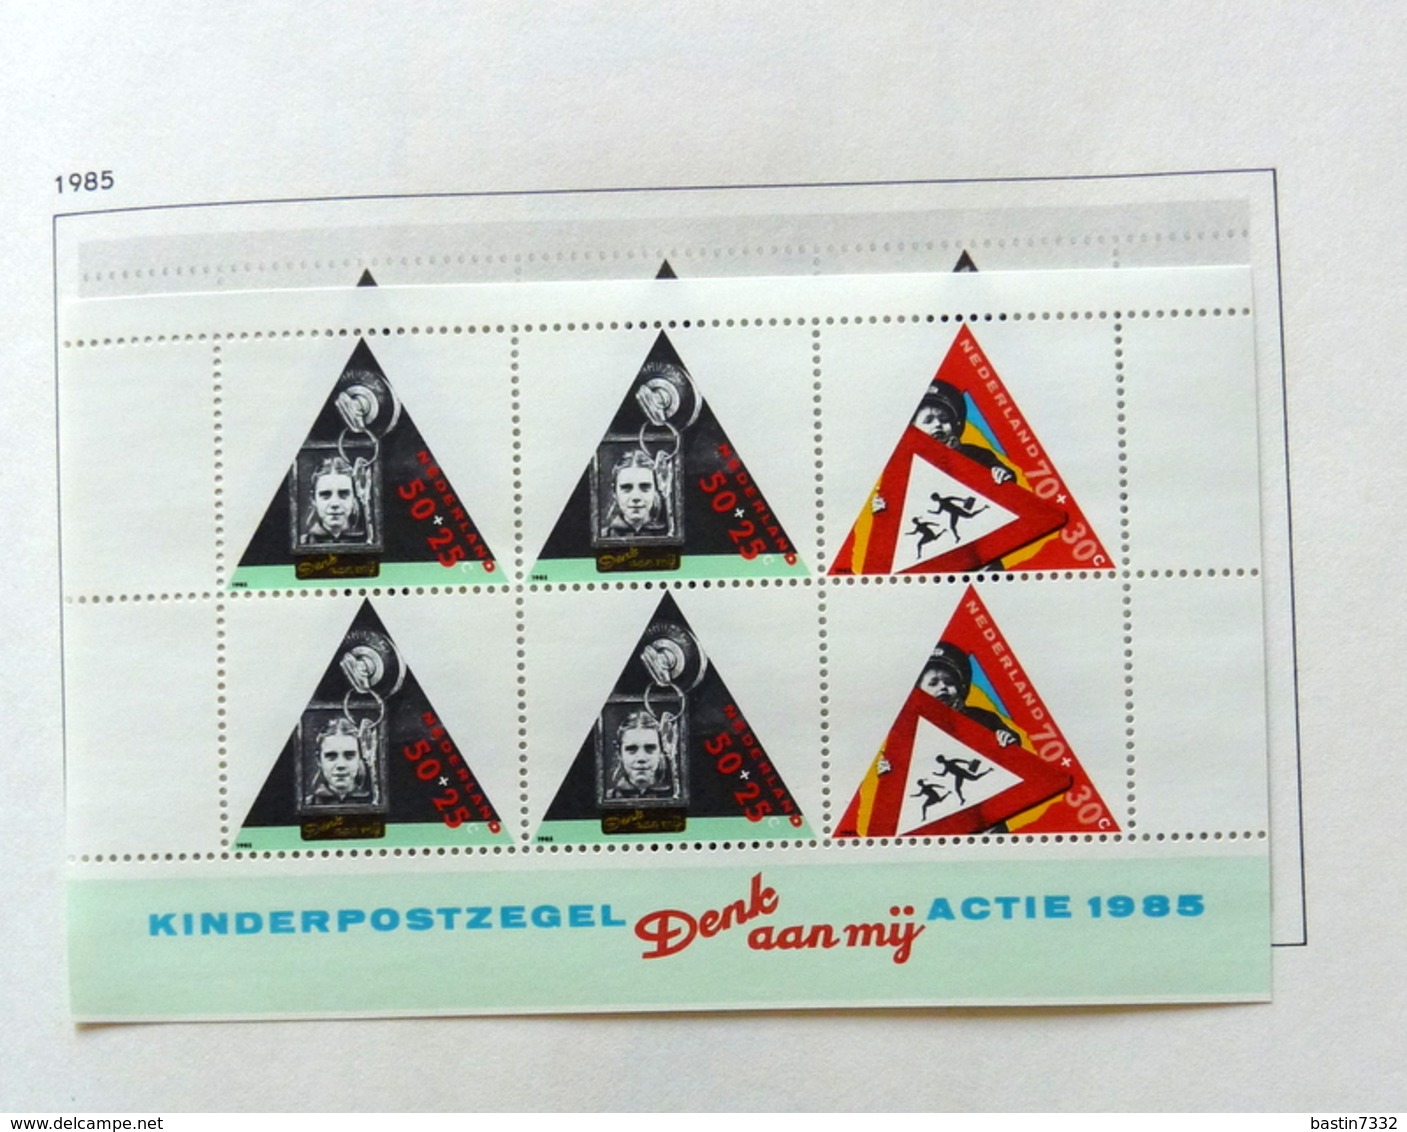 Netherlands/Pays Bas 1971-1993 in Davo binder MNH/Postfris/Neuf sans charniere